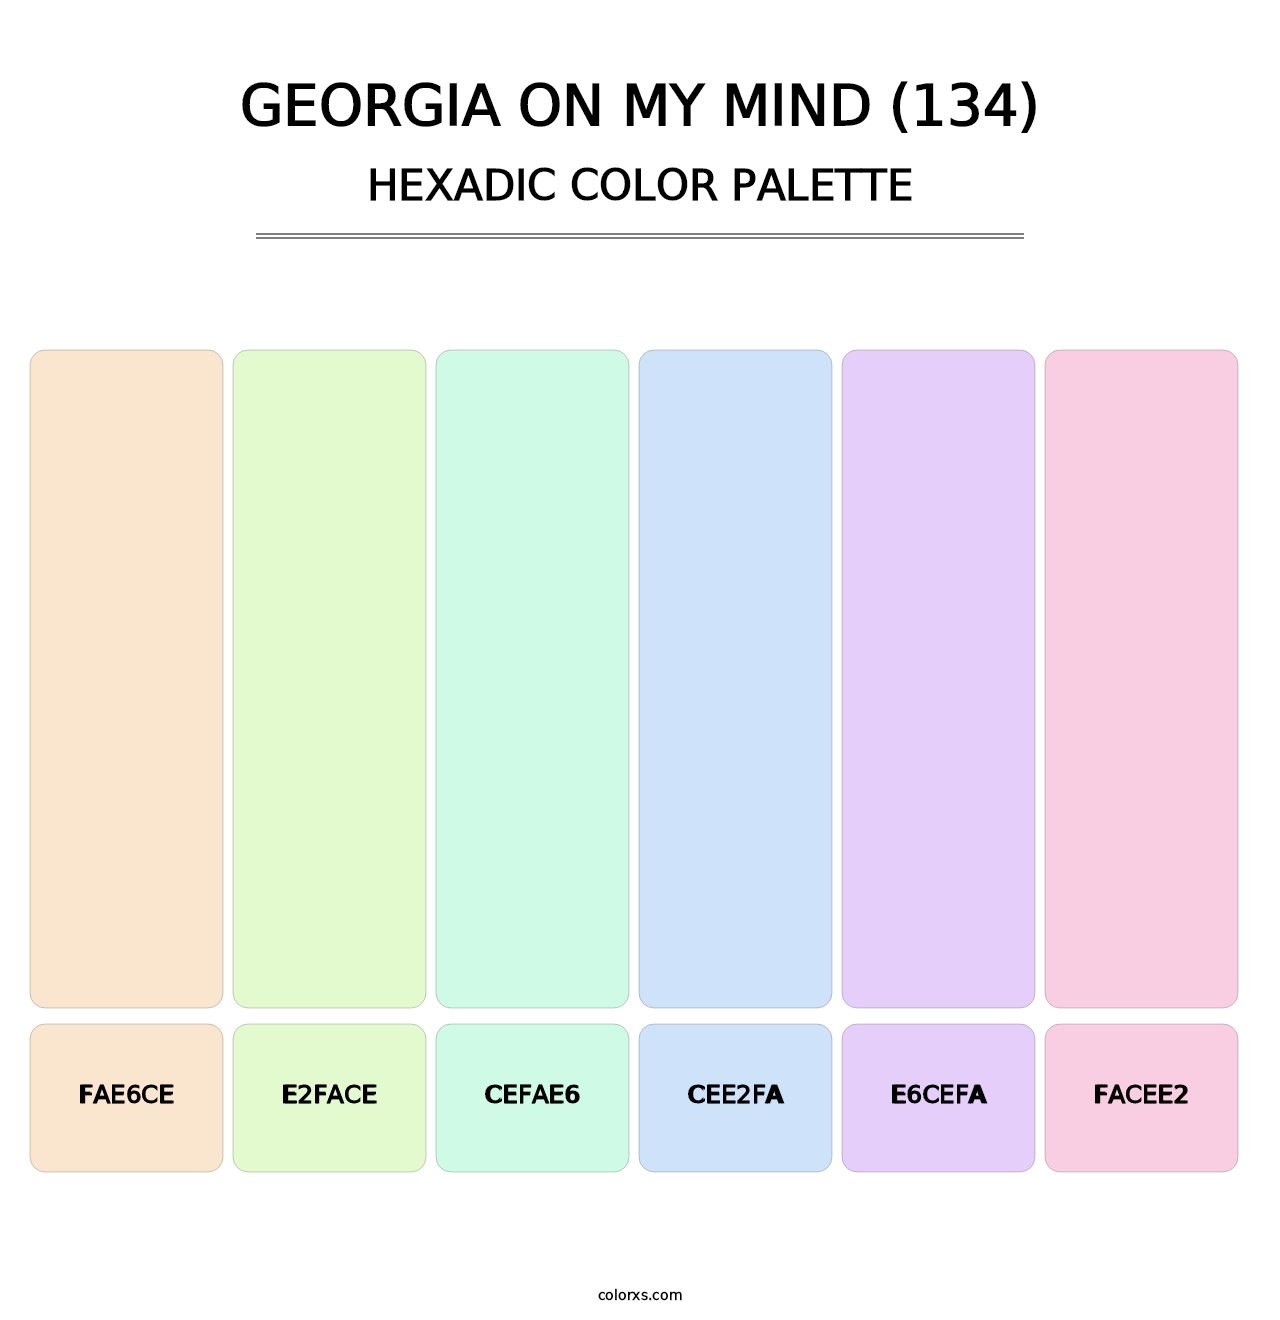 Georgia On My Mind (134) - Hexadic Color Palette